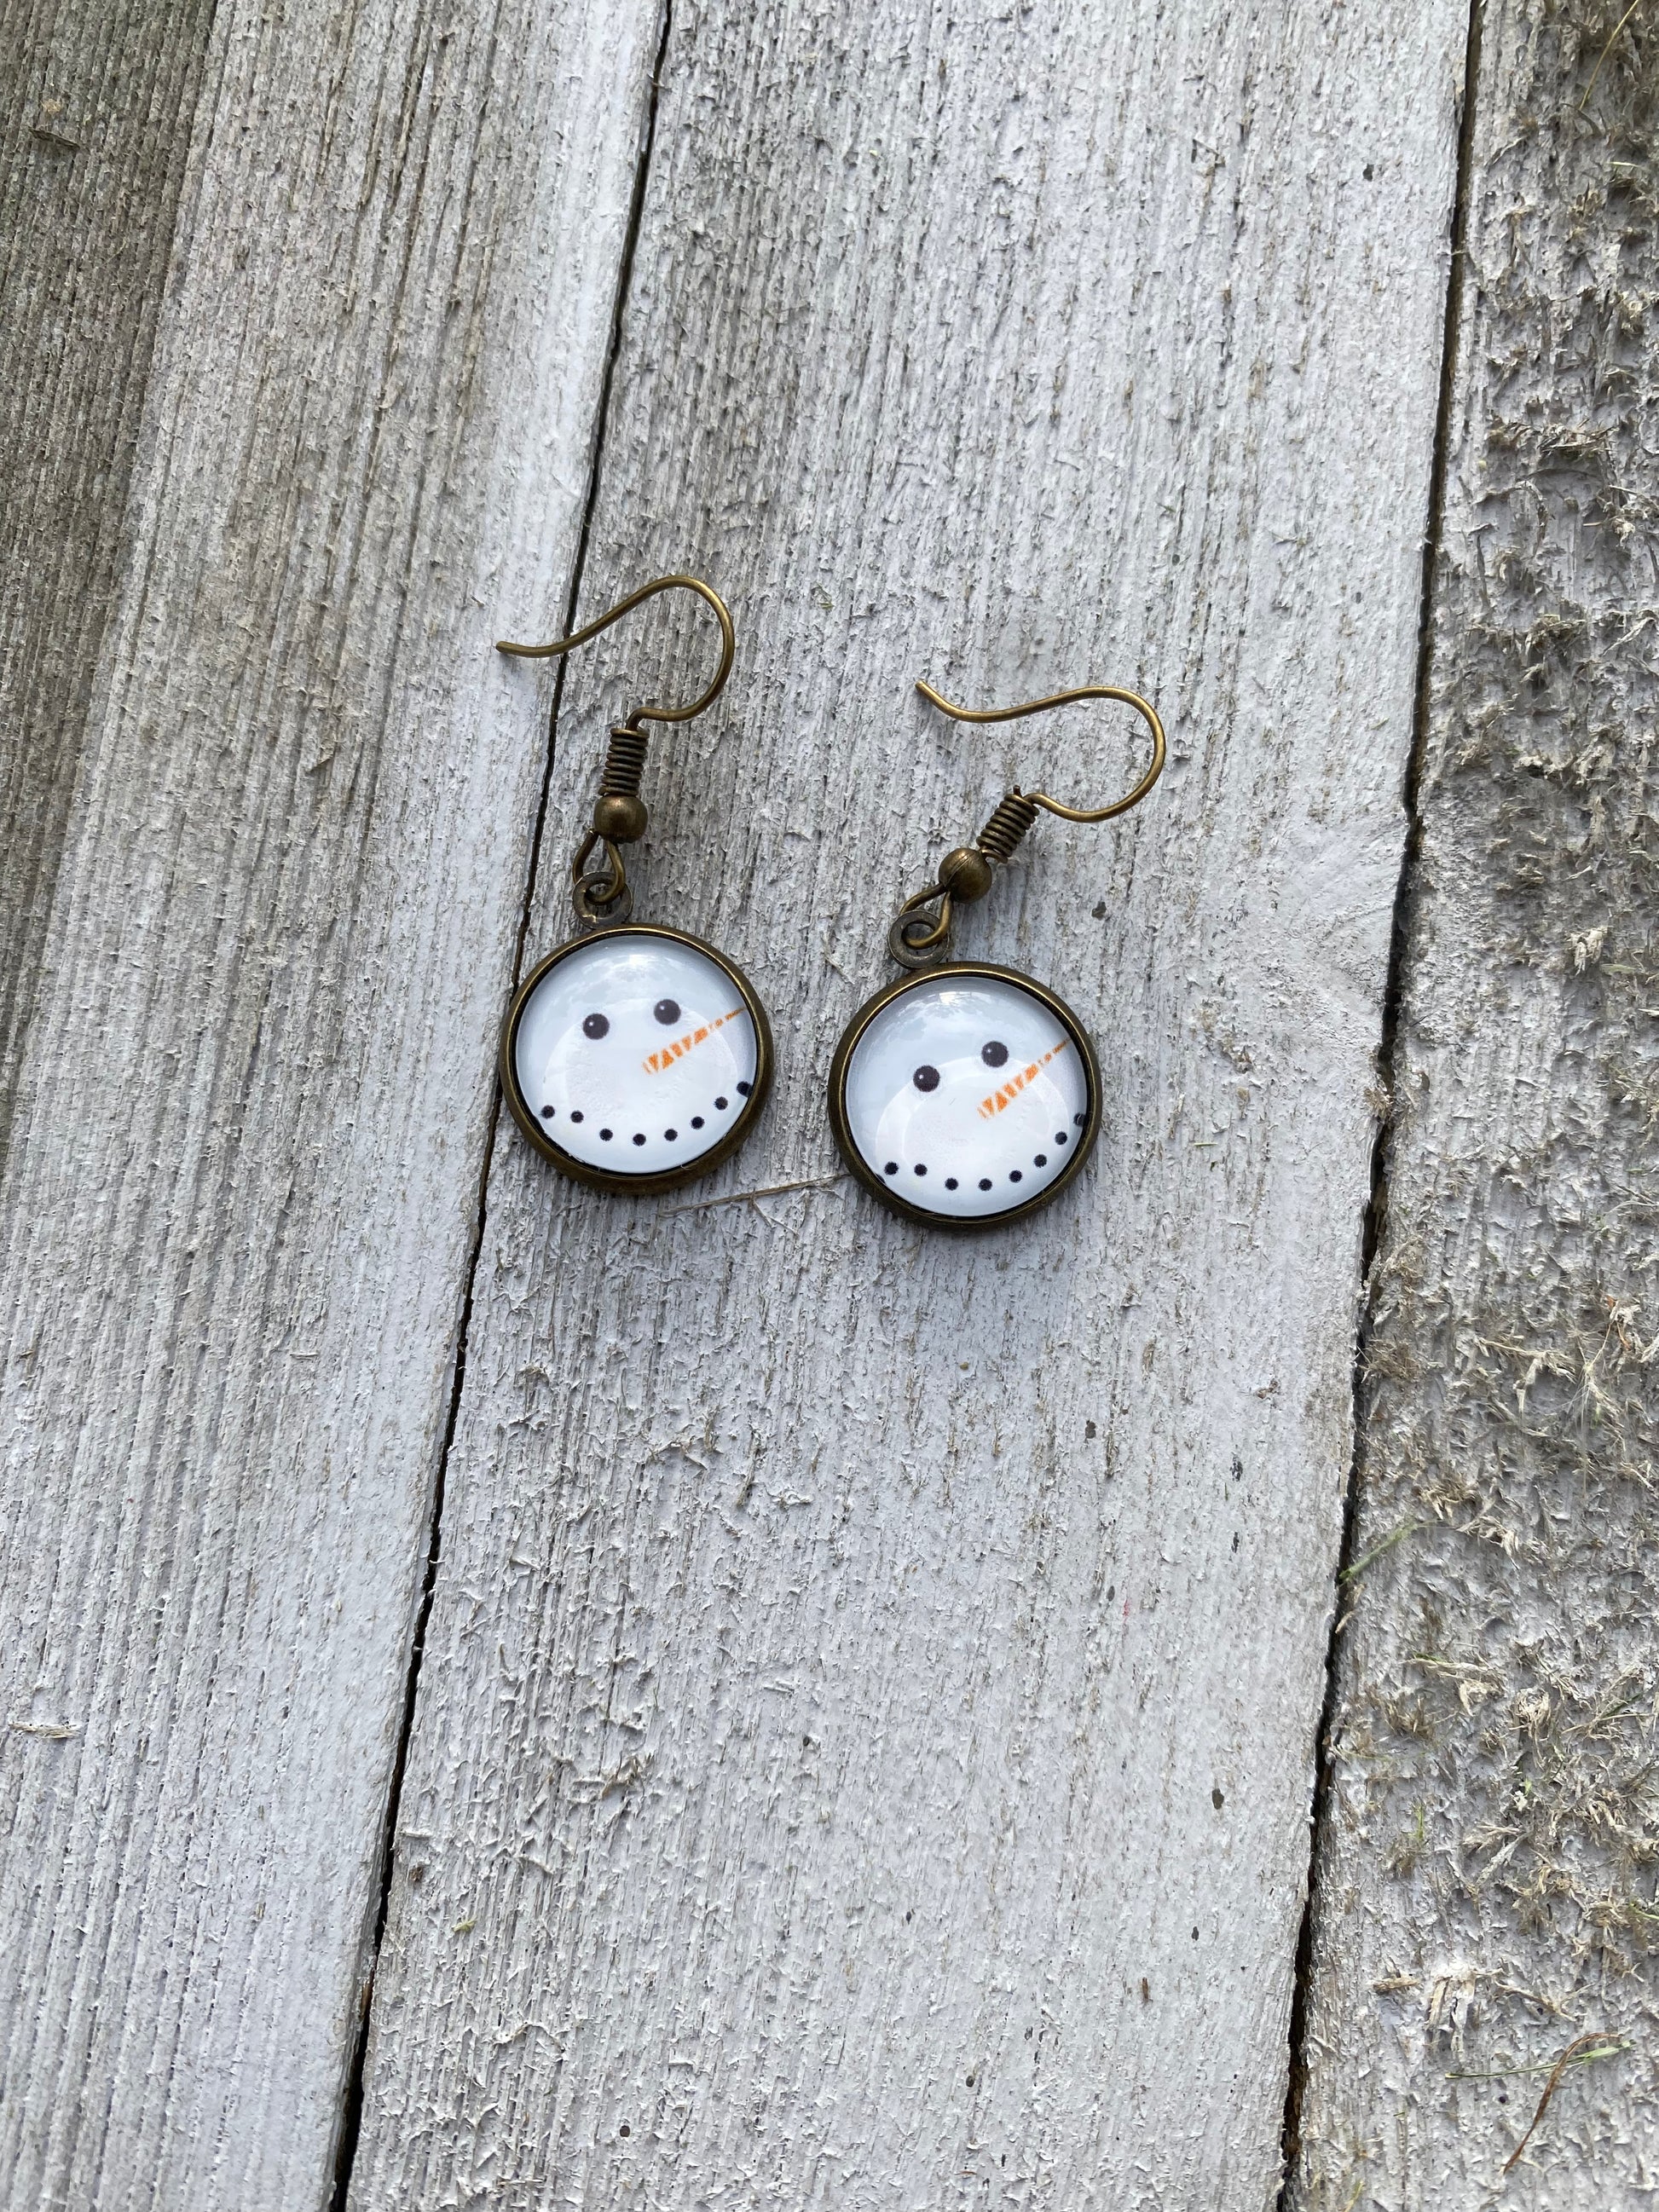 Snowman Christmas Novelty Dangle Earrings Gift 